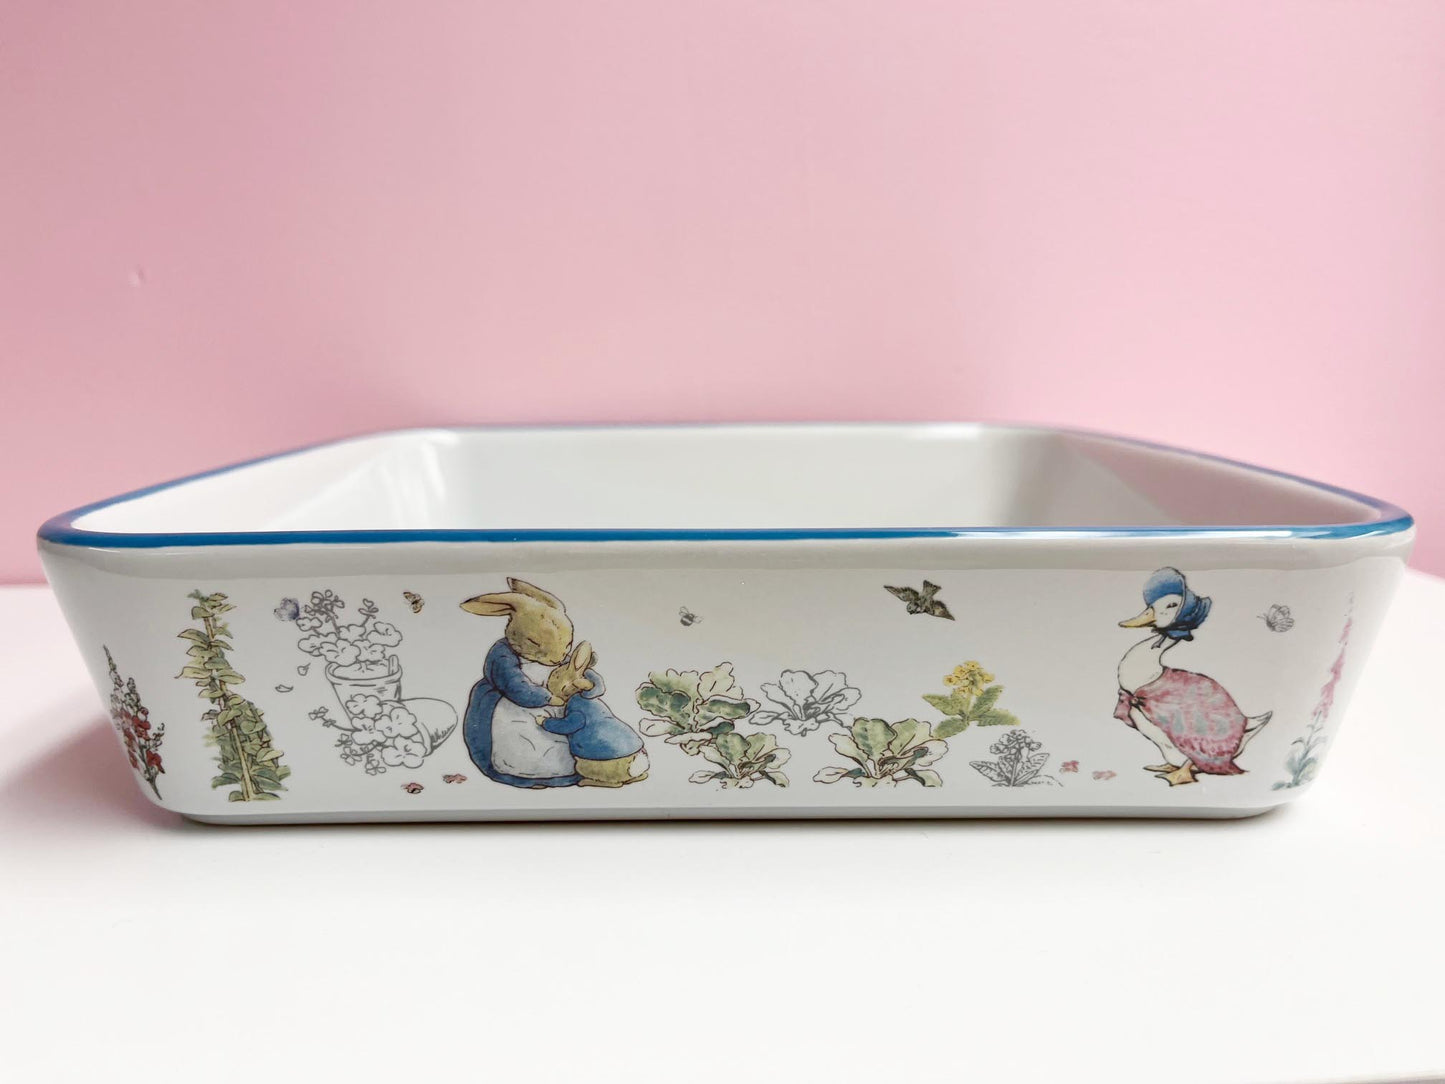 Peter Rabbit Ceramic Square 9"x9" Baking Dish